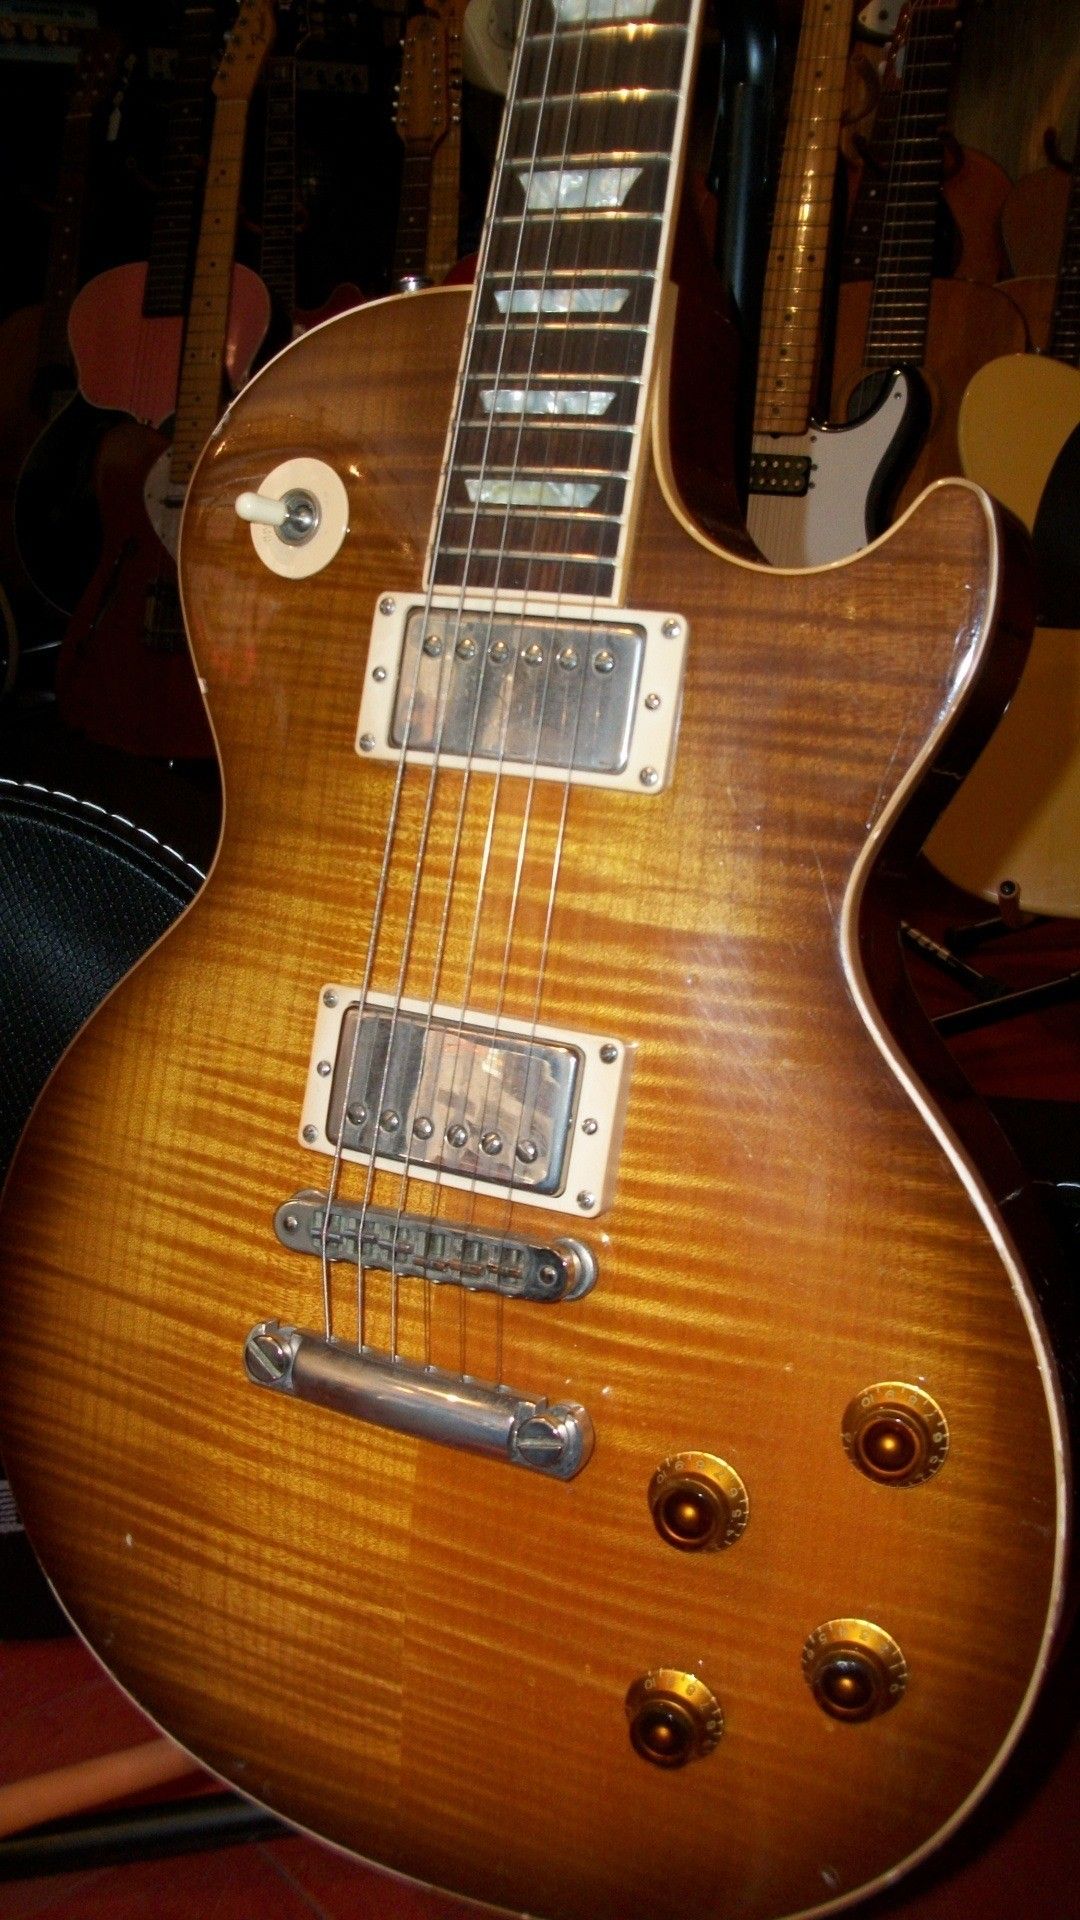 ✓[50+] Gibson Guitar Wallpaper HD - Android, iPhone, Desktop HD Backgrounds  / Wallpapers (1080p, 4k) (png / jpg) (2023)